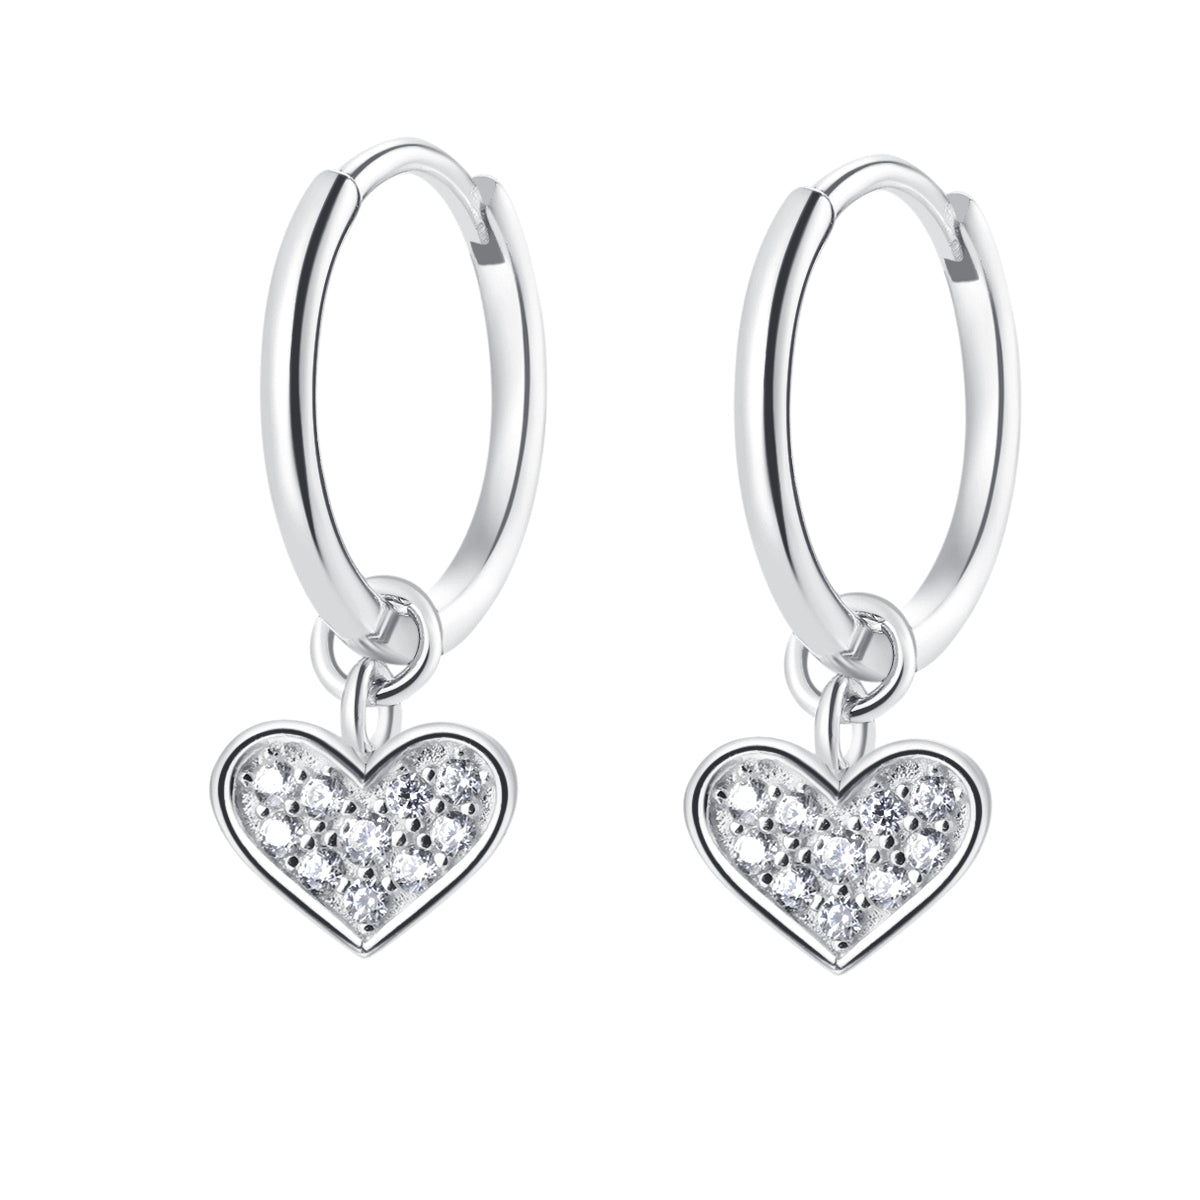 Heart Charm Hoop Earrings Sterling Silver